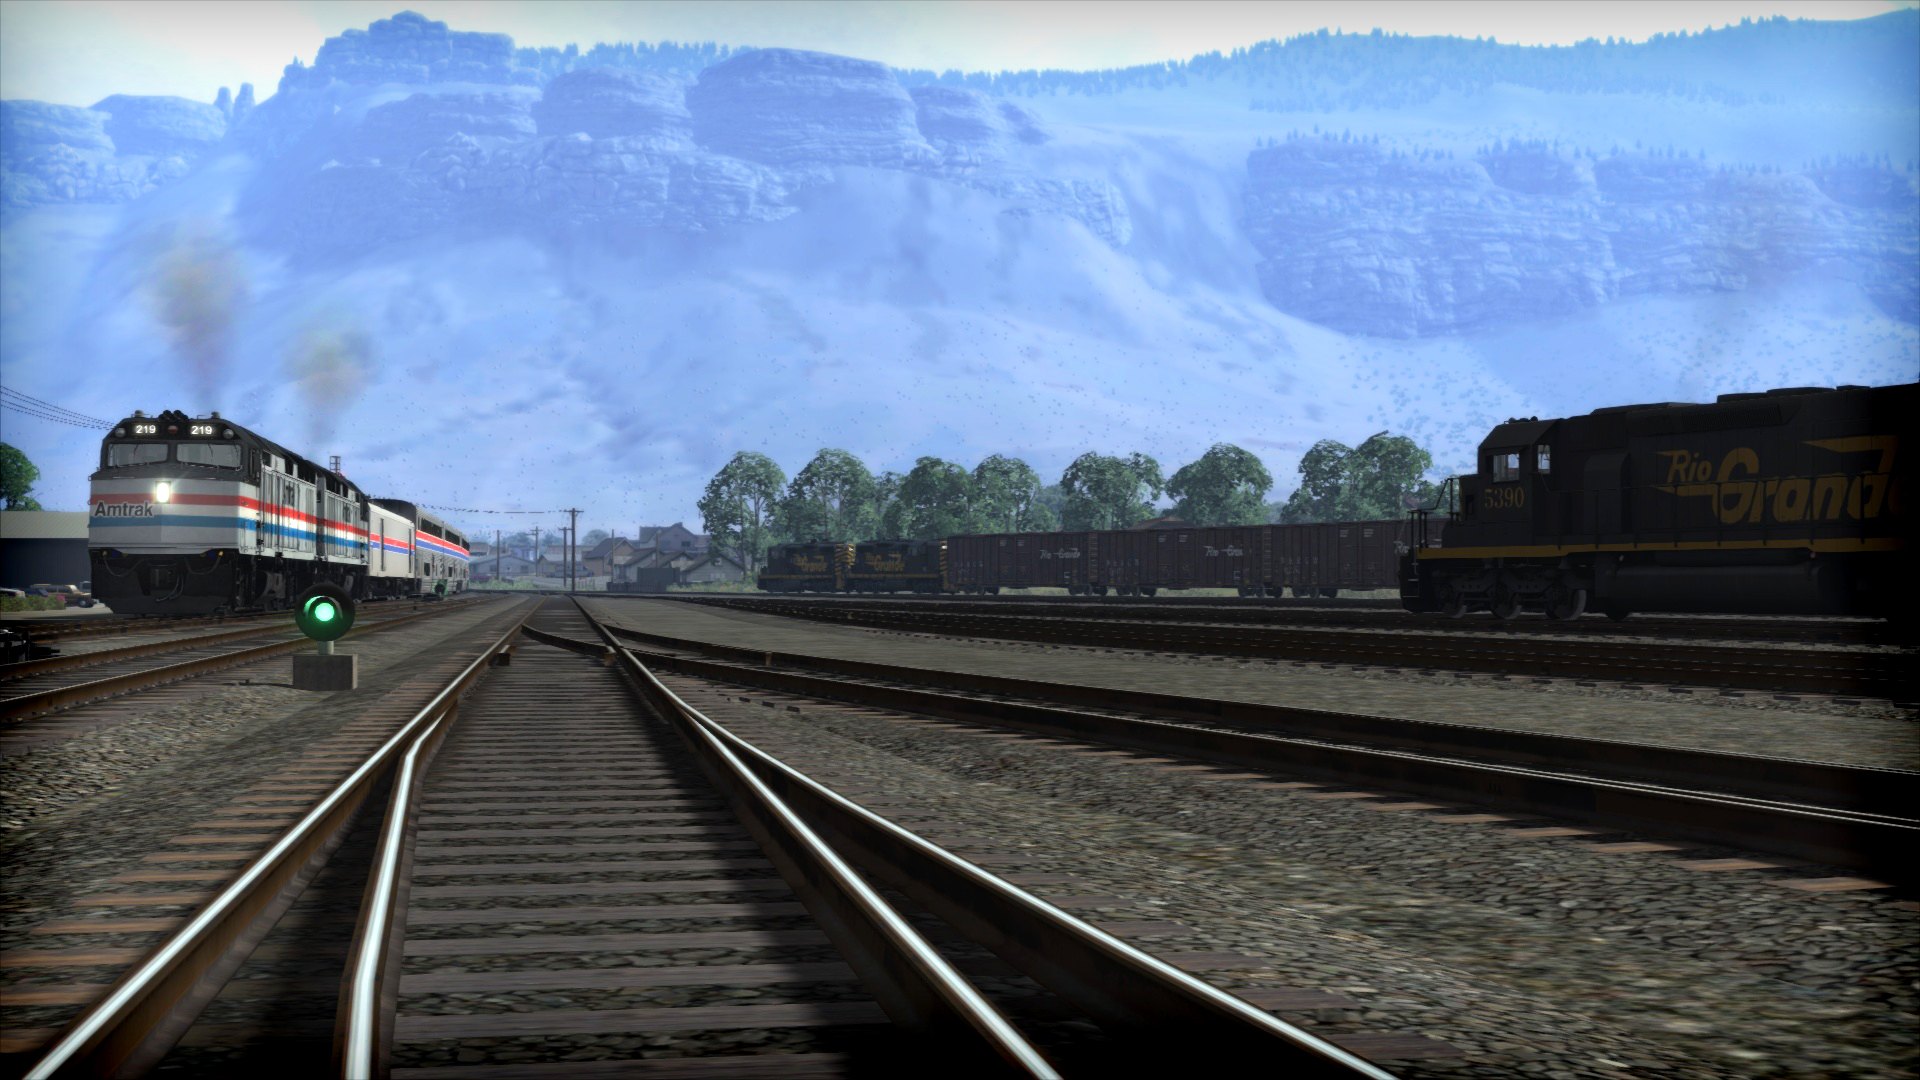 Train Simulator 2019 - Soldier Summit Route Add-On DLC Steam CD Key